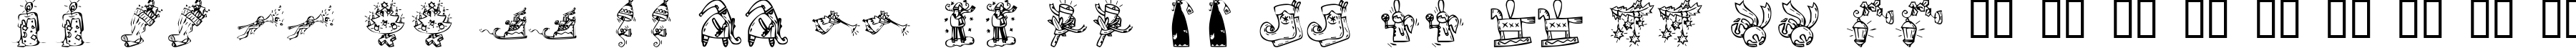 Пример написания английского алфавита шрифтом KR Christmas 2002 Dings 2